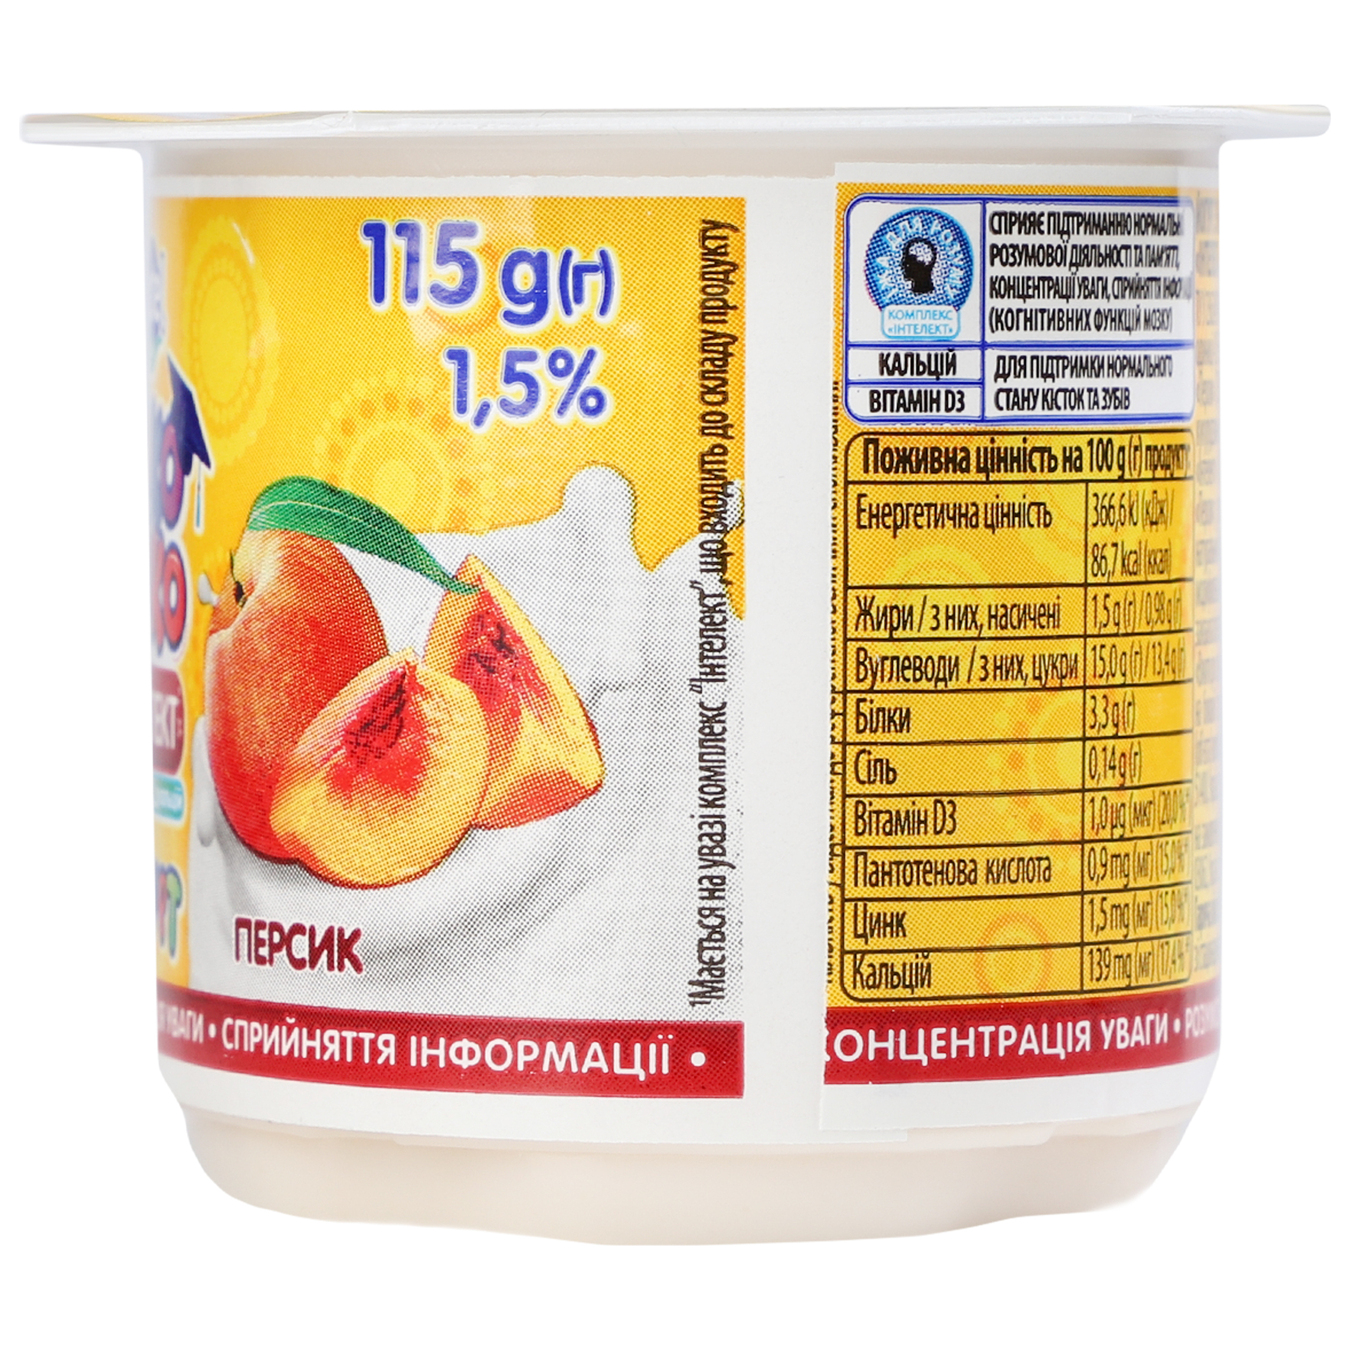 Lactel Loko Moko Peach Flavored Yogurt 1,5% 115g 3